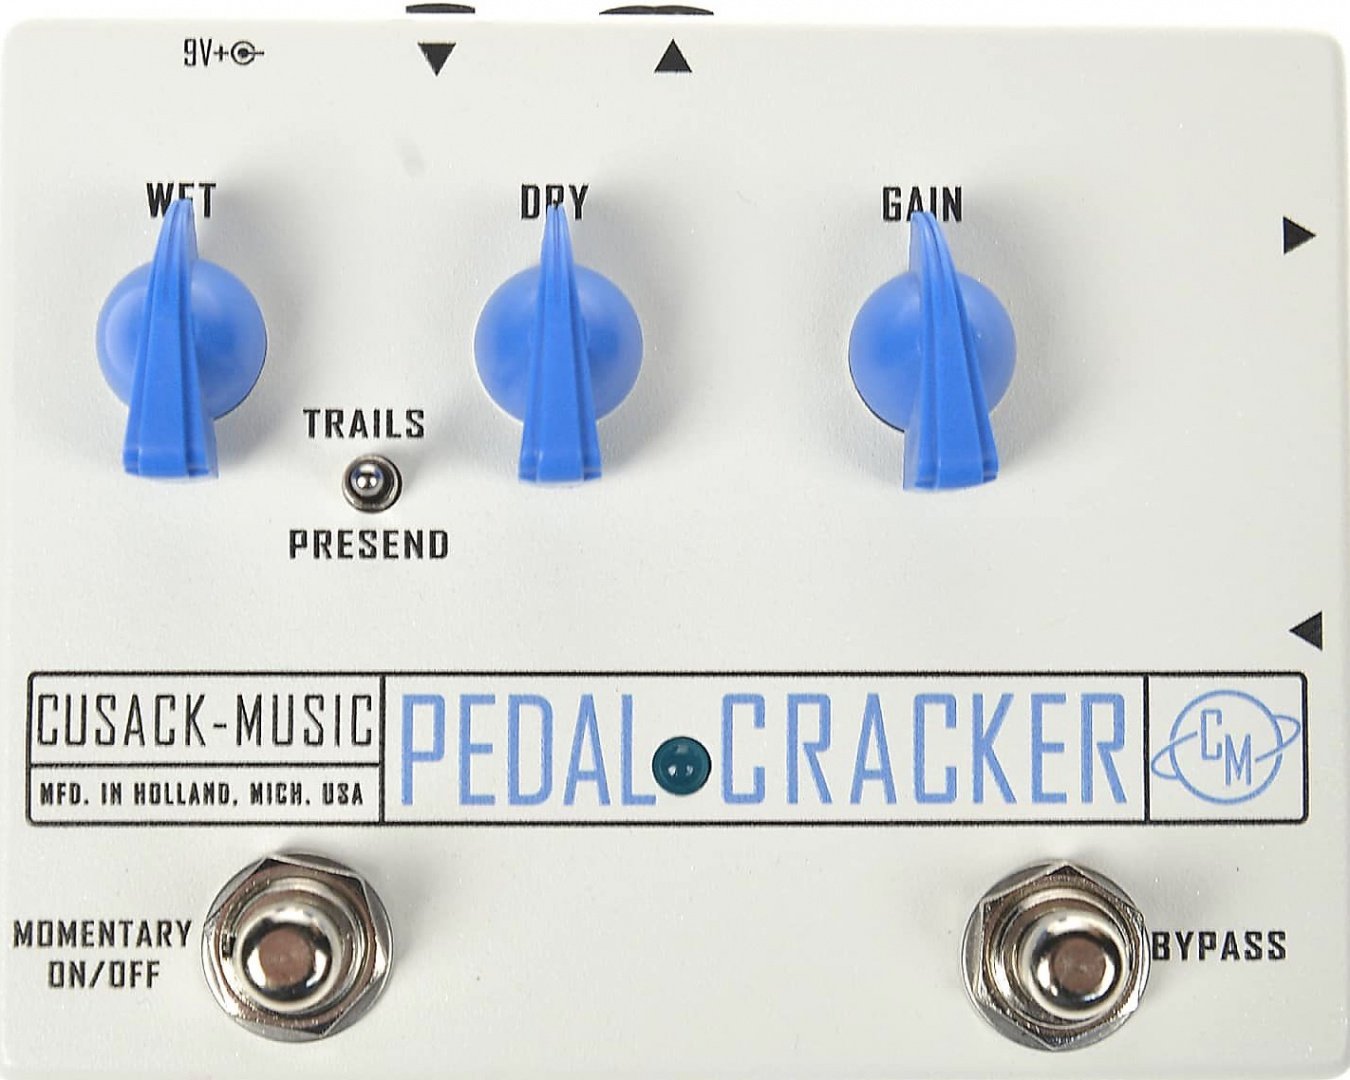 Para aumentar Carrera segundo Cusack Music Pedal Cracker - Pedal on ModularGrid